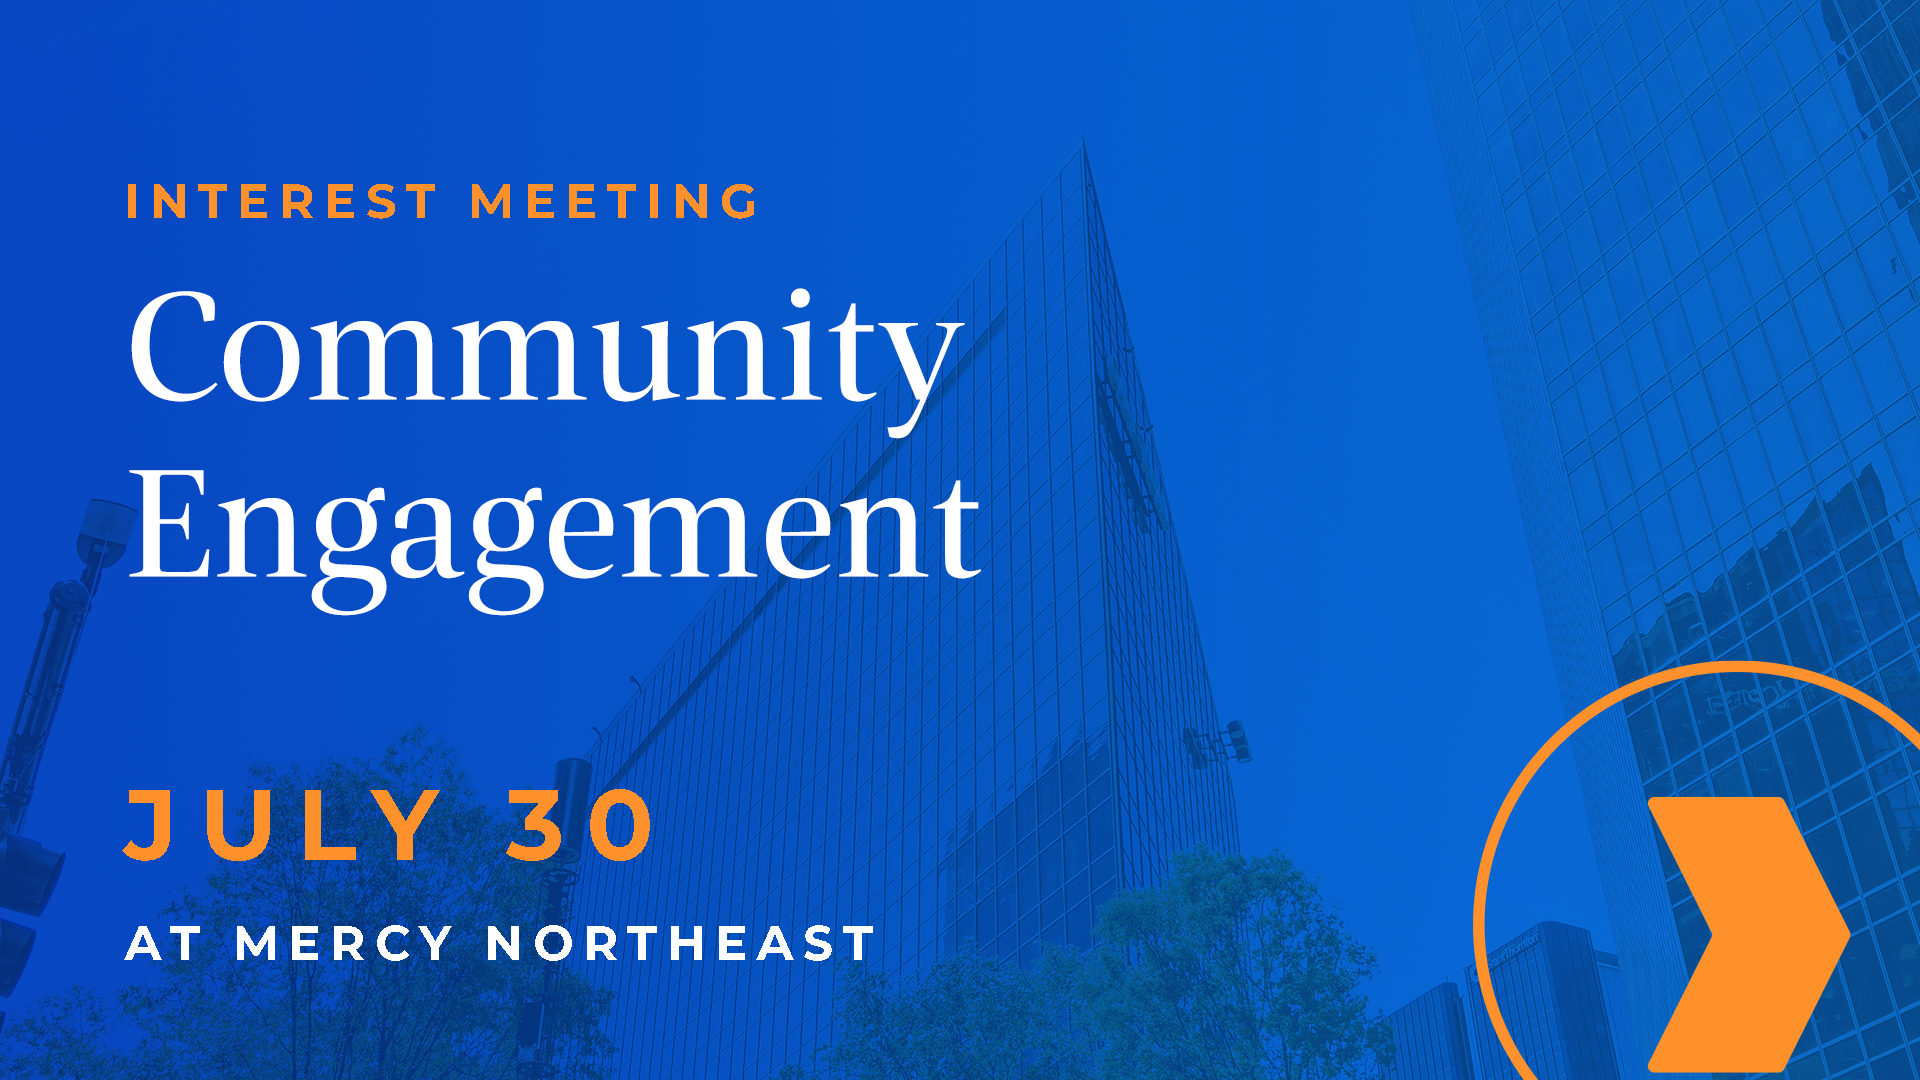 Community Engagment Interest Meeting - Community Engagement Interest Meeting